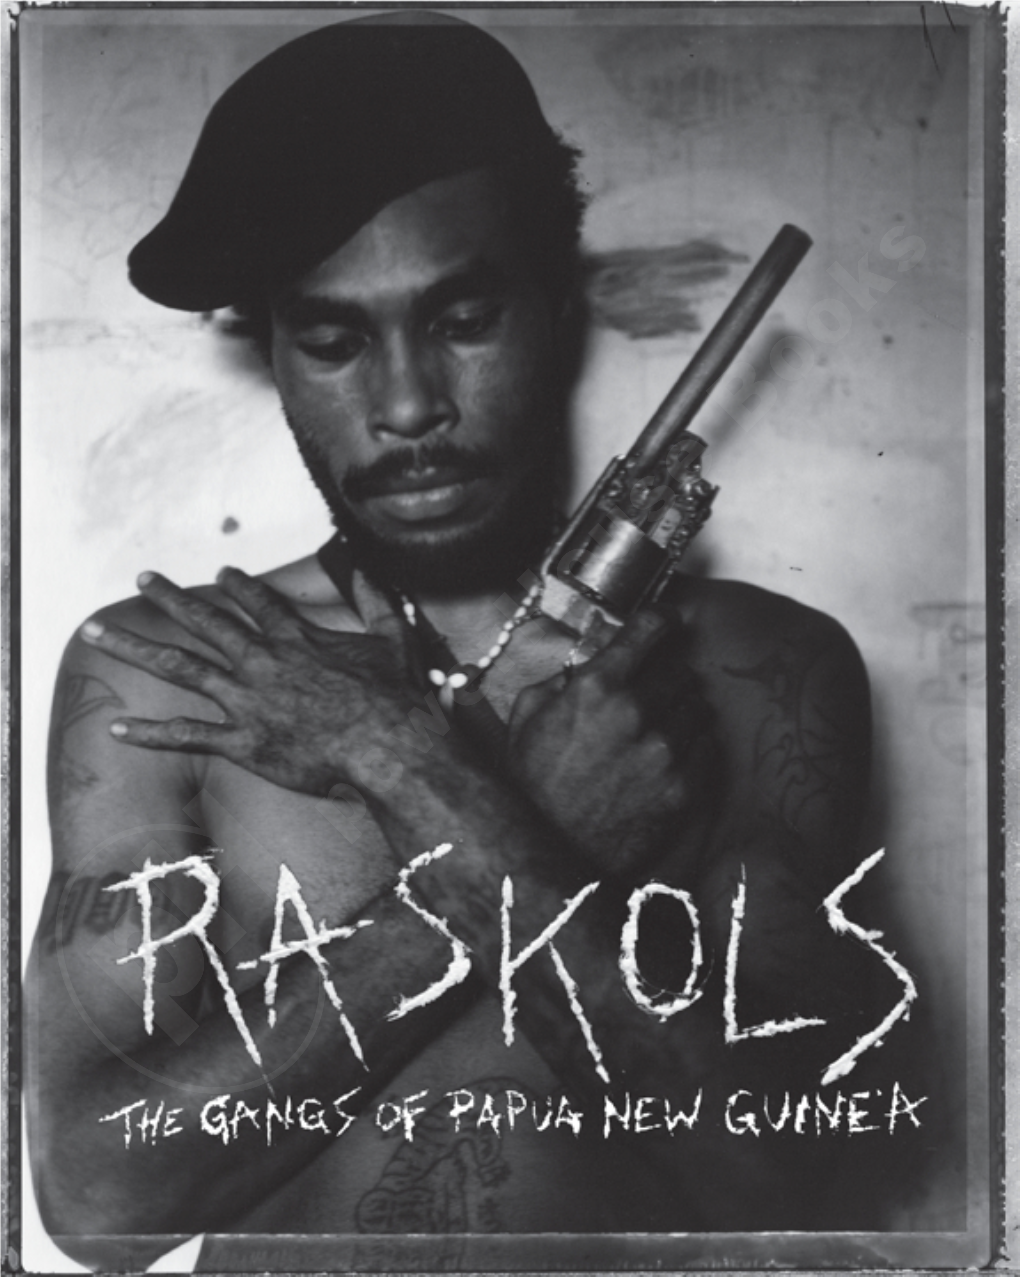 'Raskols: the Gangs of Papua New Guinea'